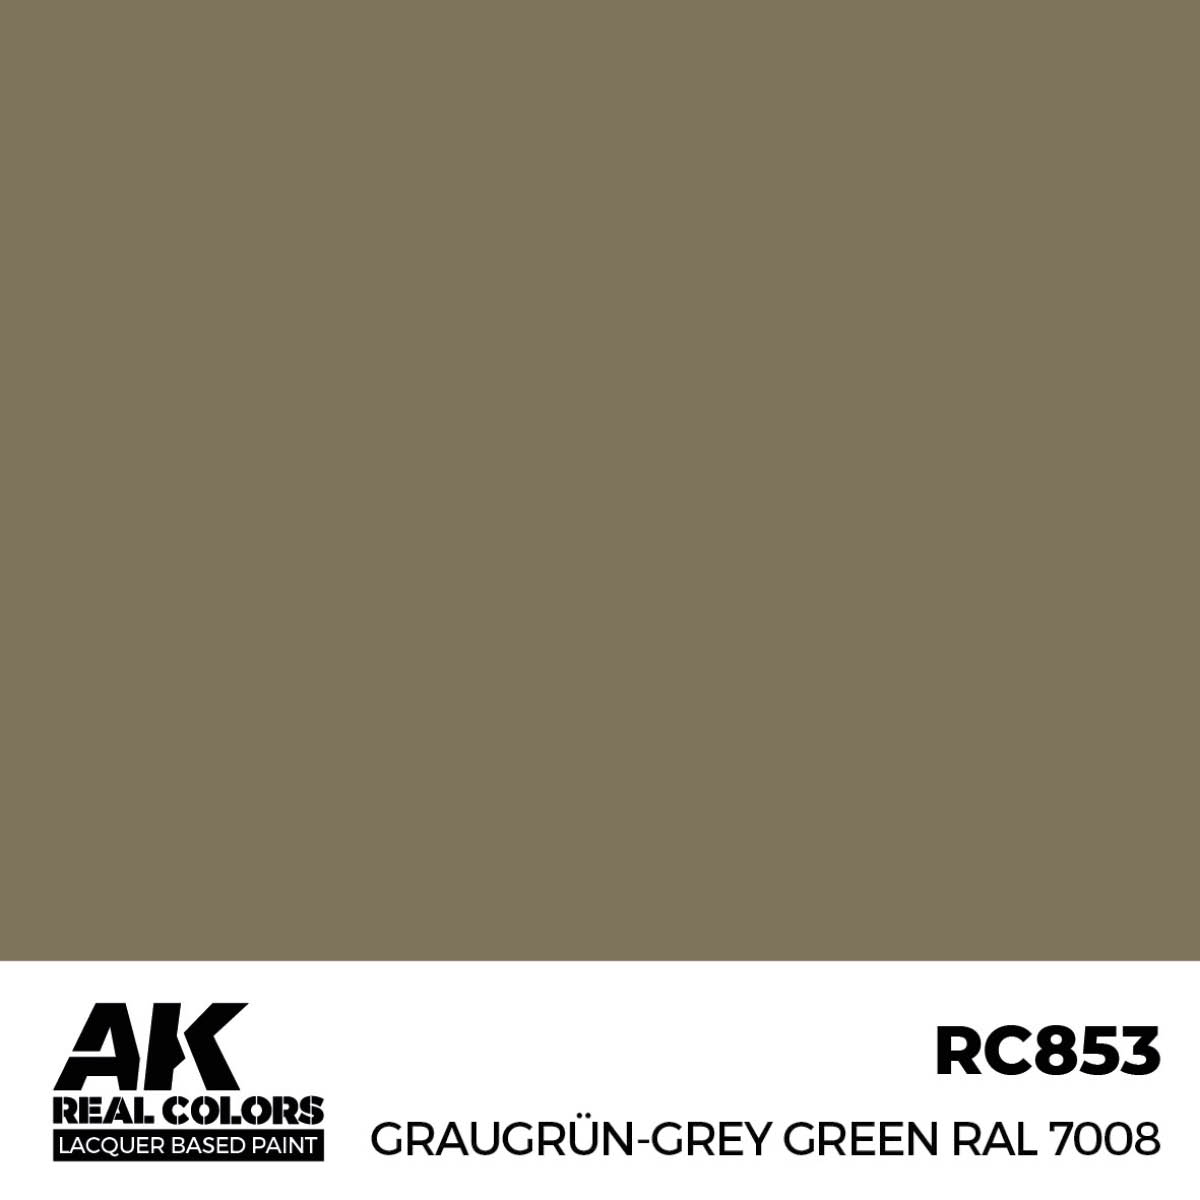 Graugrün-Grey Green RAL 7008